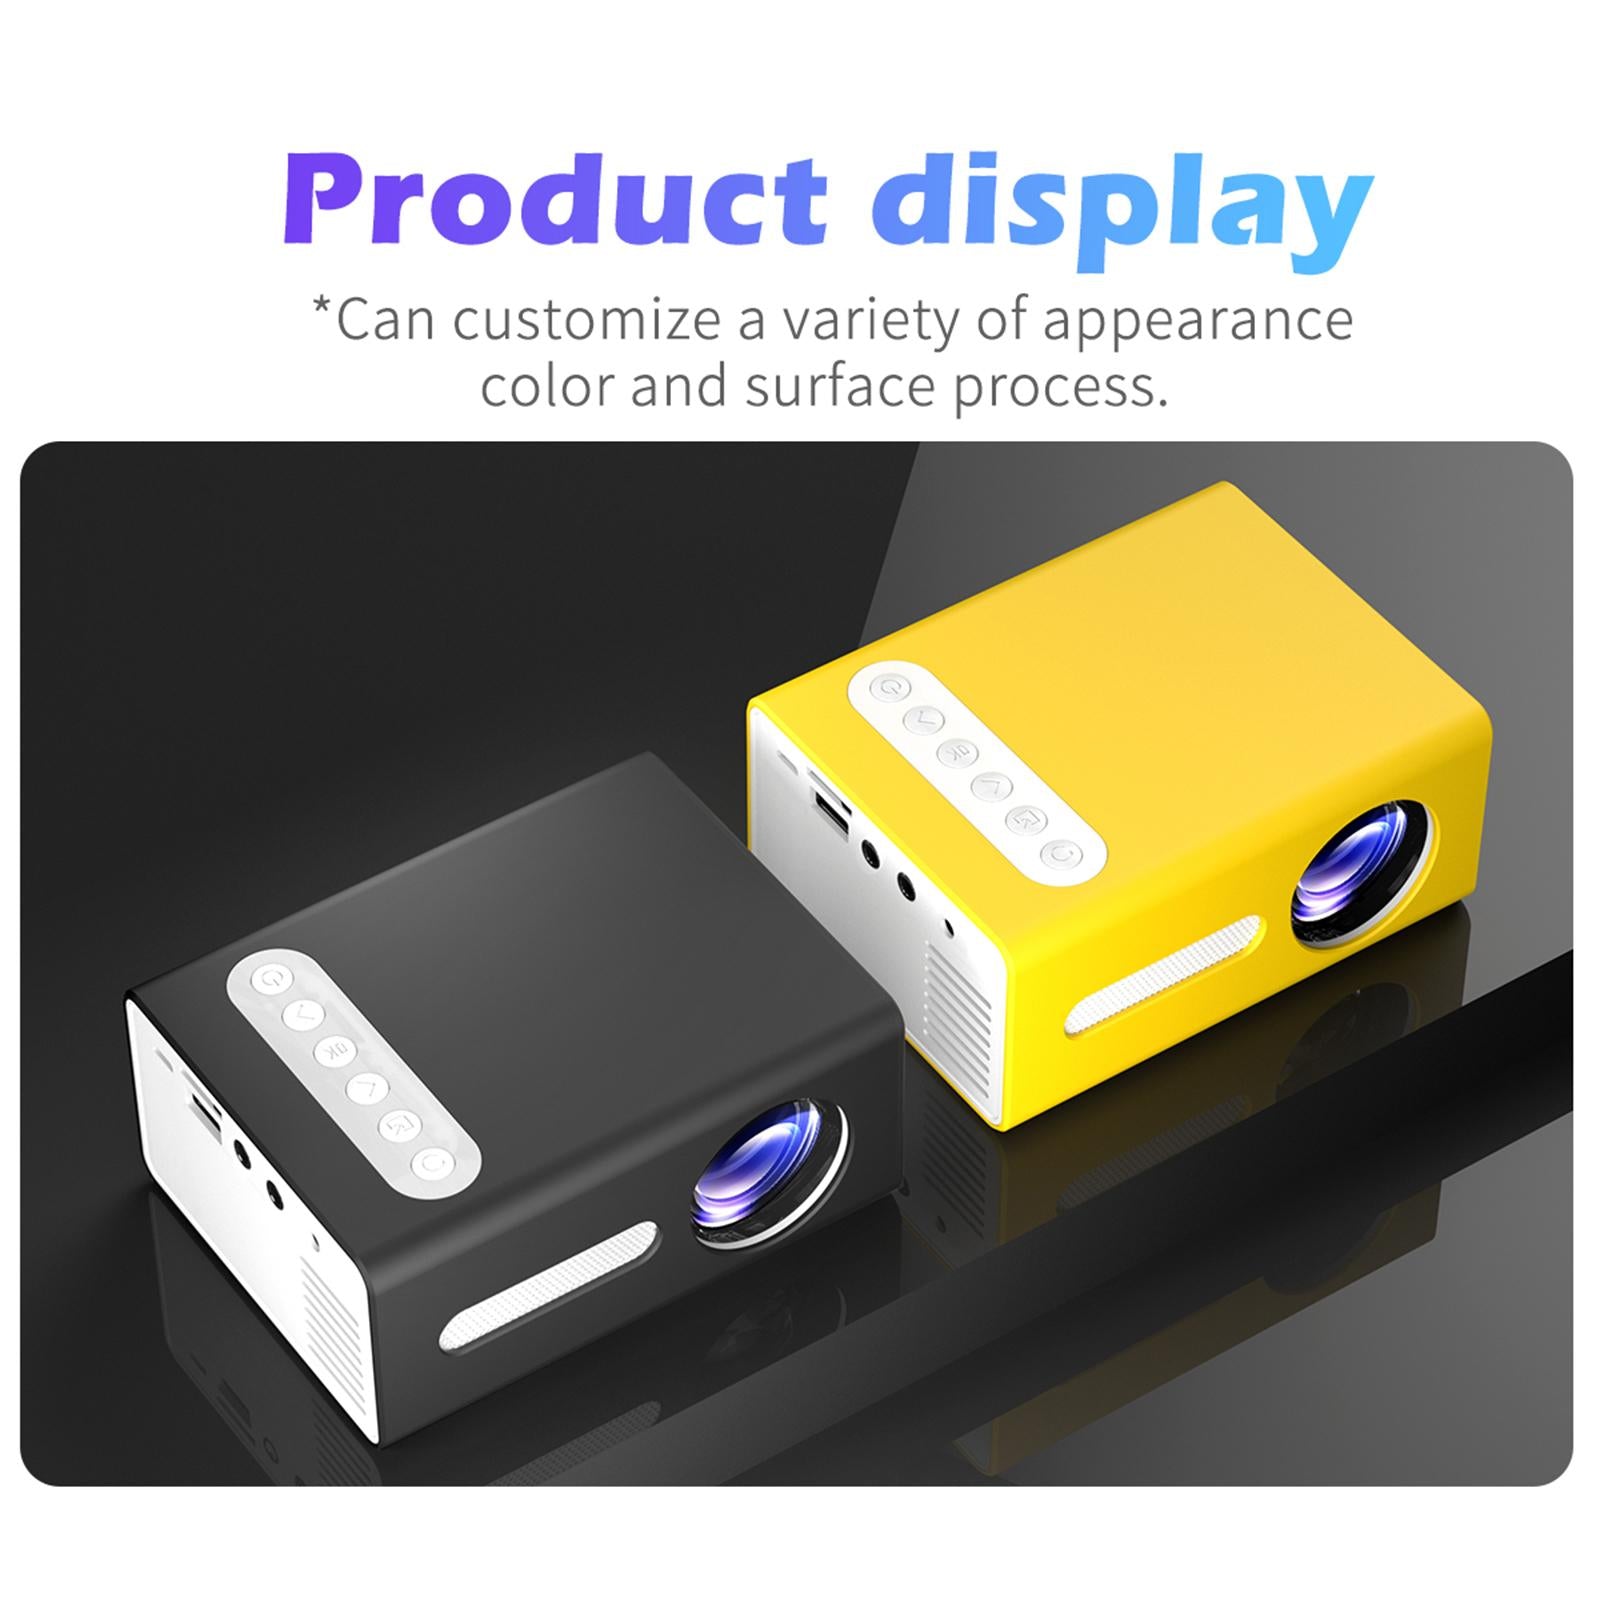 Portable T300 LED Mini Pocket Video Projector 1080P HDMI USB TF AV Kids Gift